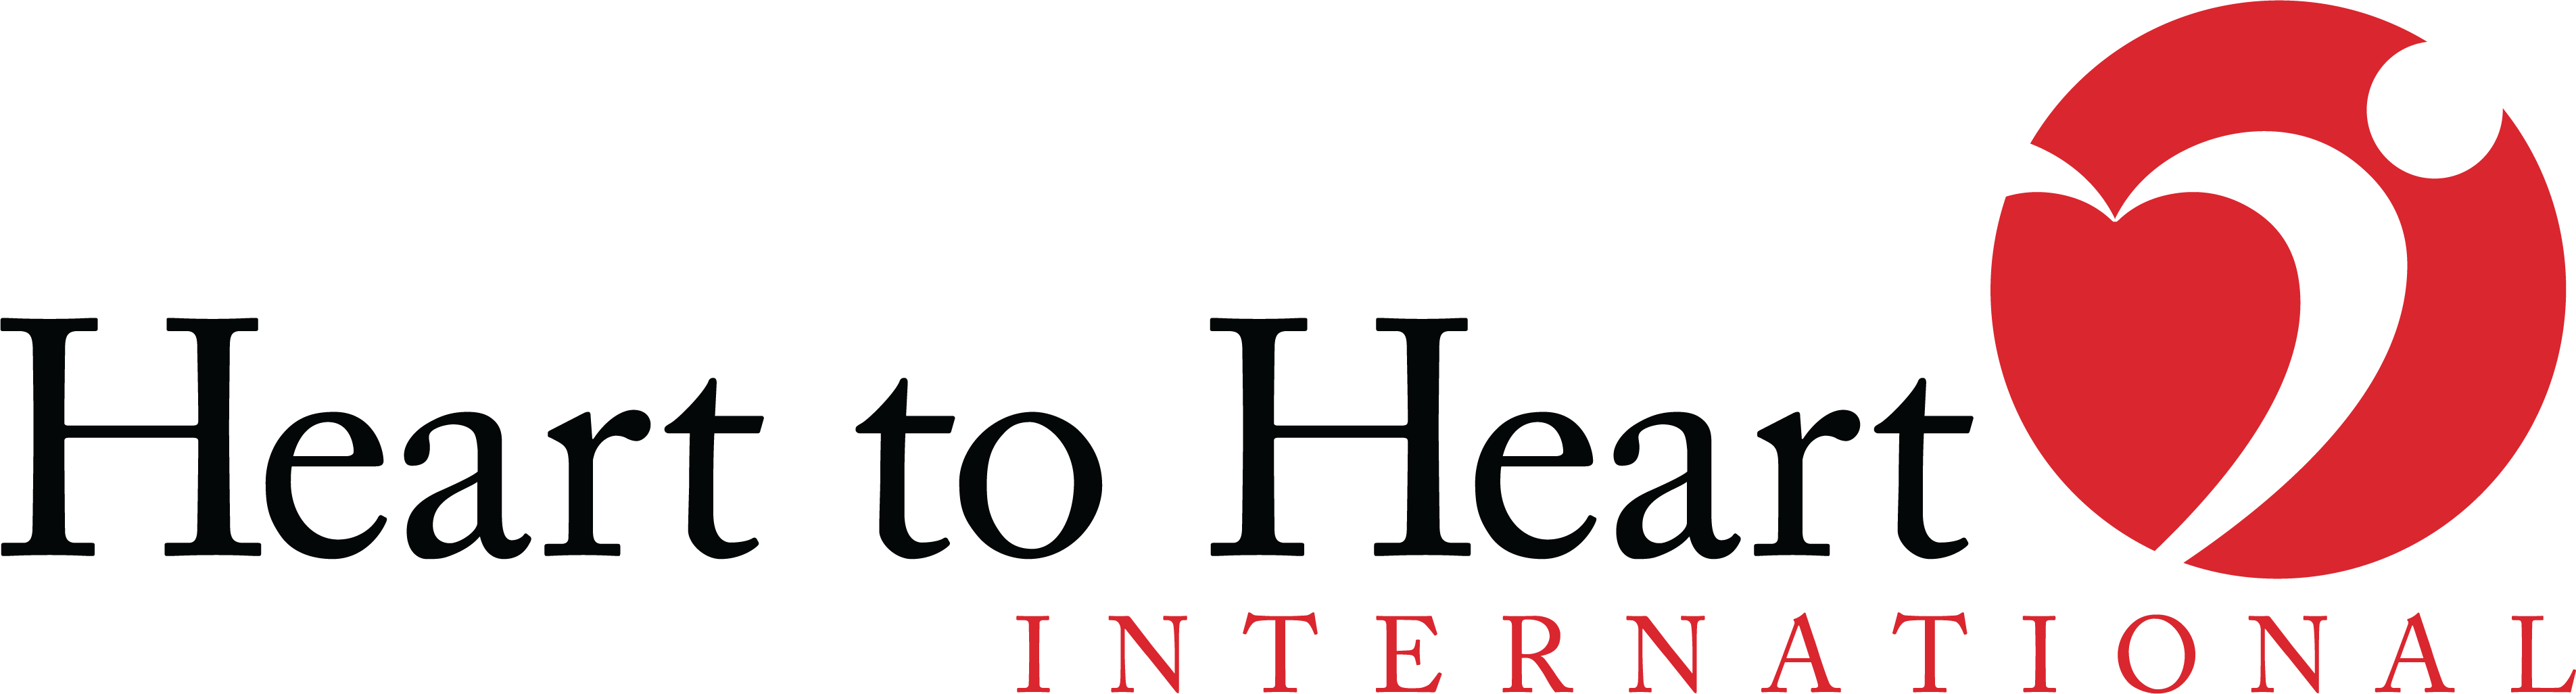 Heart to Heart International Volunteer Application